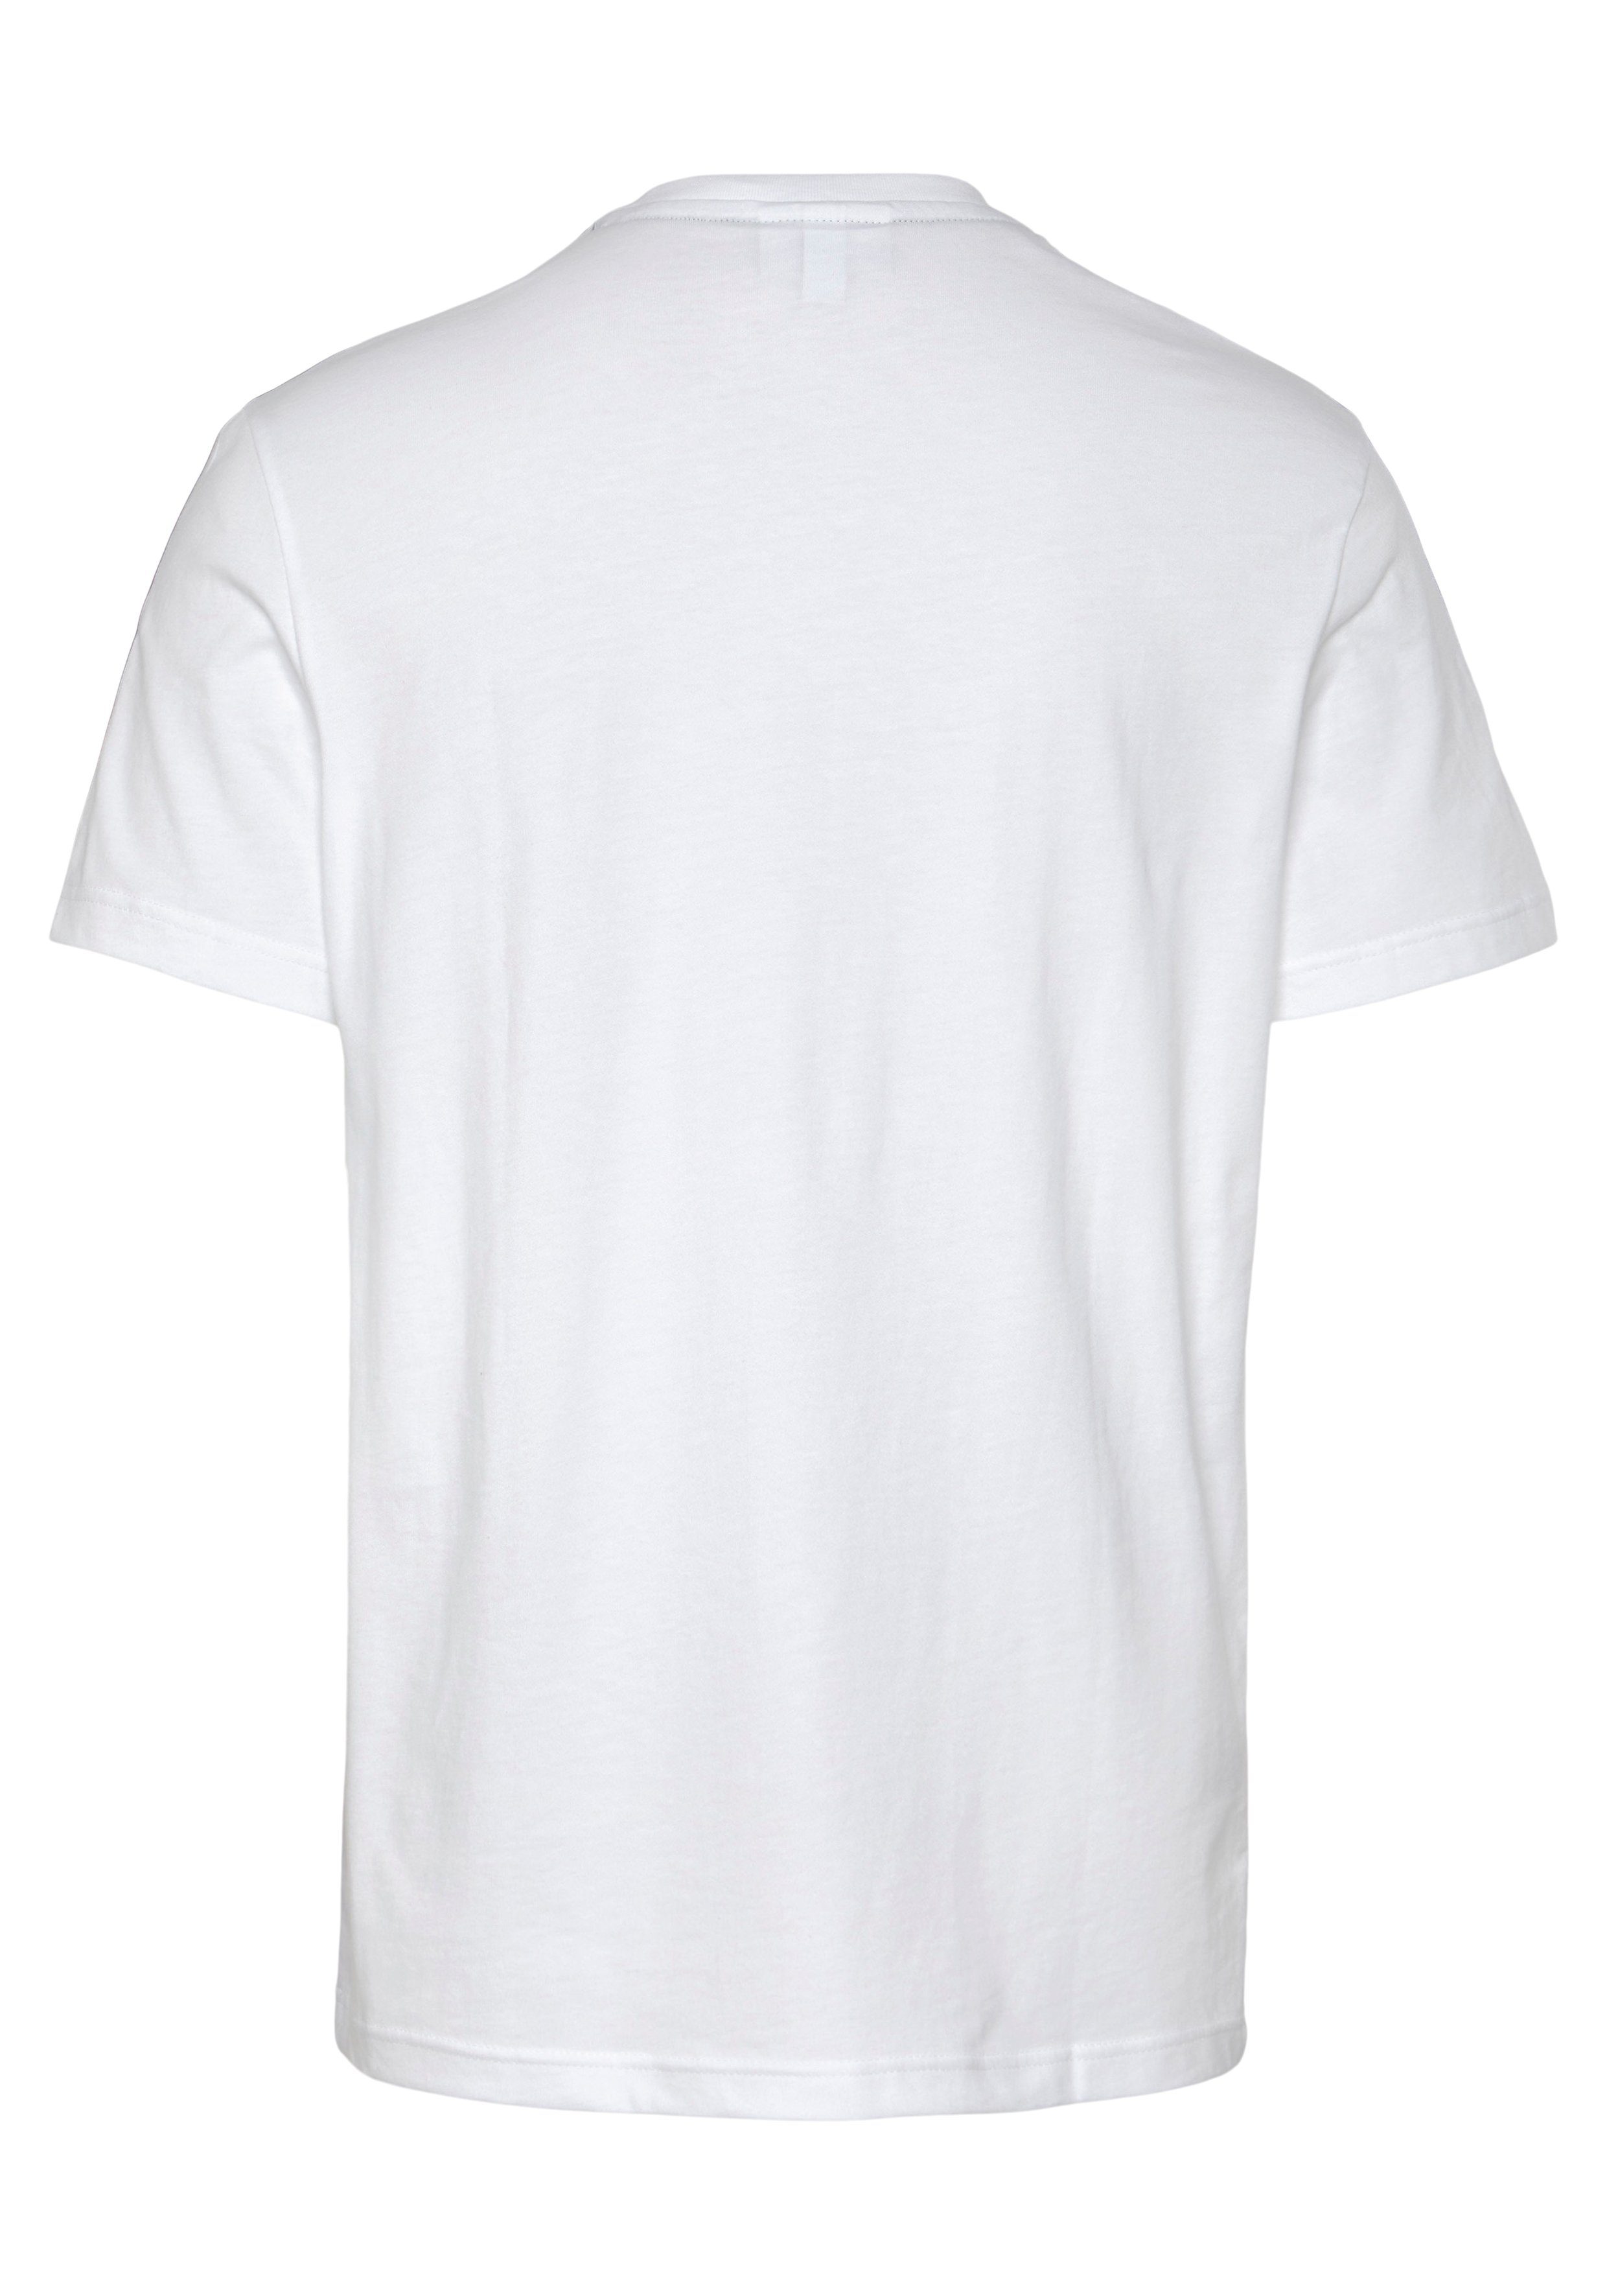 Schultern den T-Shirt Lacoste mit Kontrastband beschriftetem white an